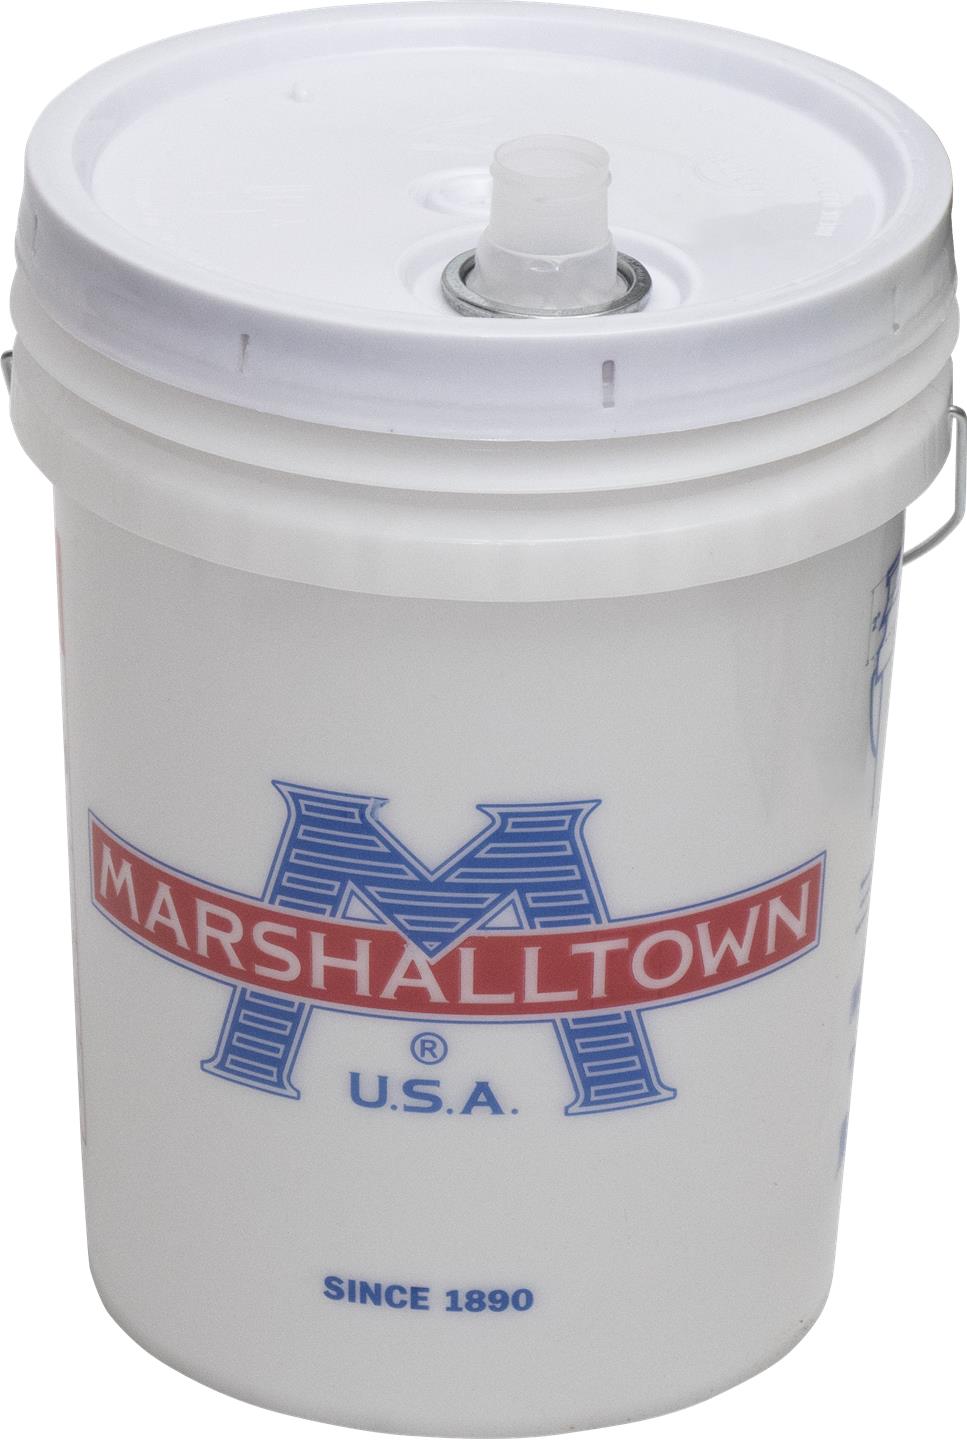 Marshalltown Pour Spout Lid w/Gasket & Tear Tab